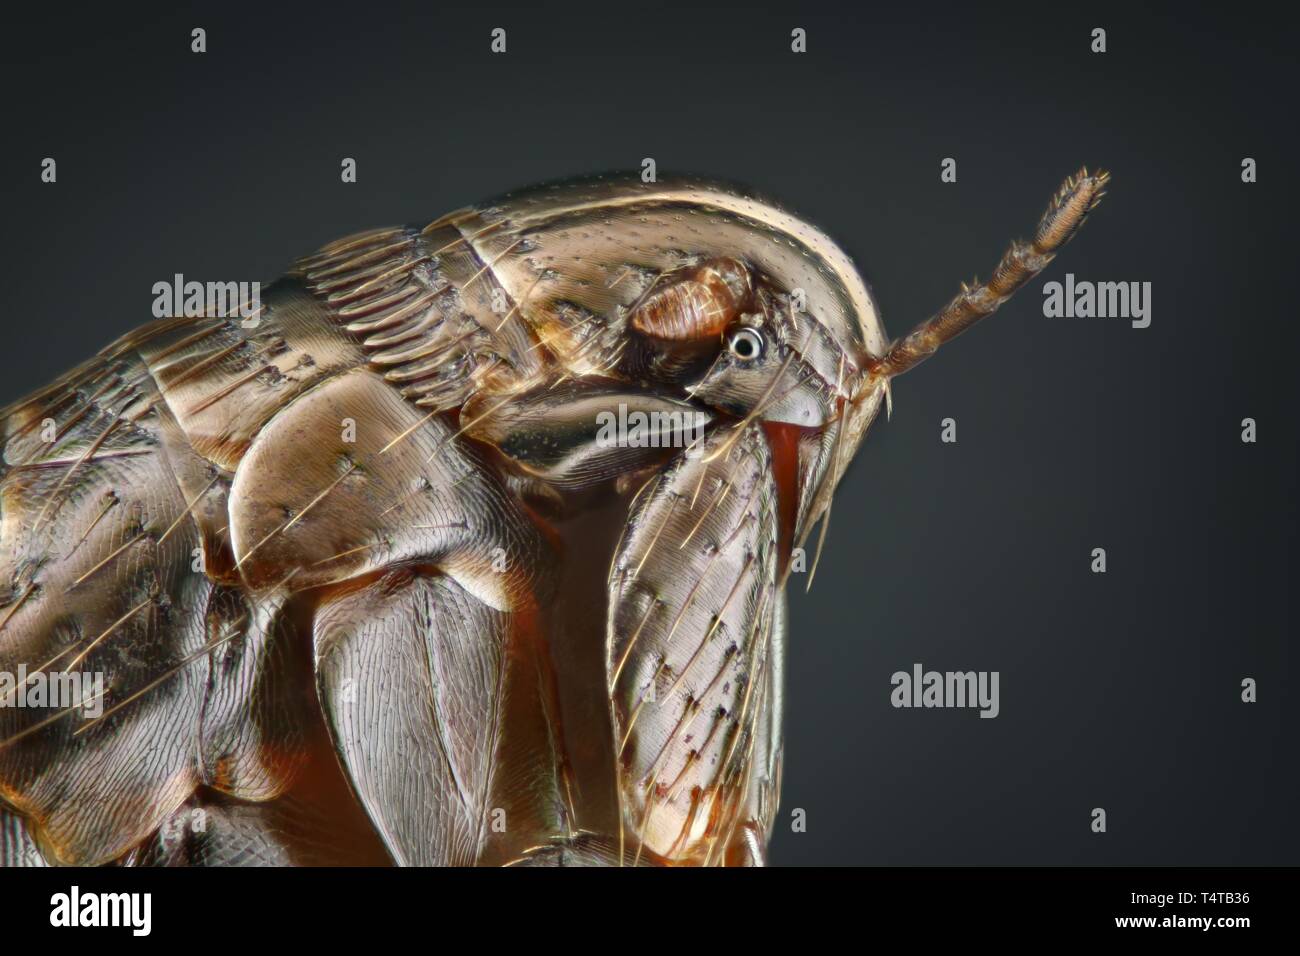 Head of a Flea (Siphonaptera) Stock Photo